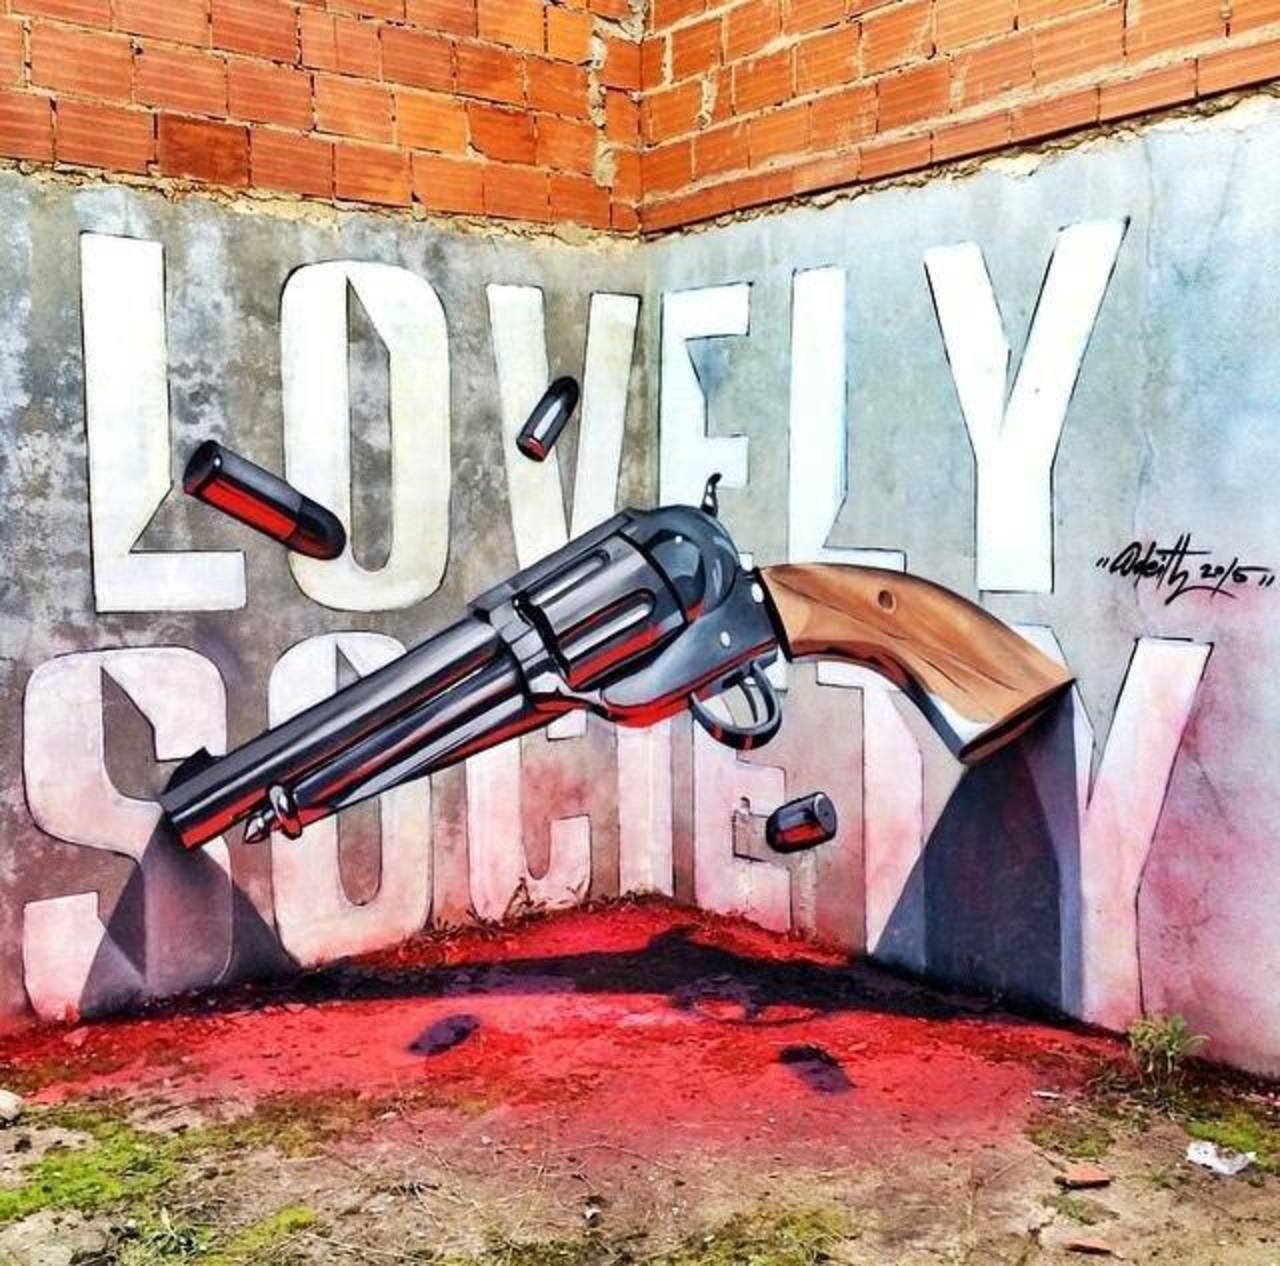 Lovely Society.
Streetart by Odeith - Eith

#streetart #urbanart #mural #graffiti #art http://t.co/ltRJBu2pIQ